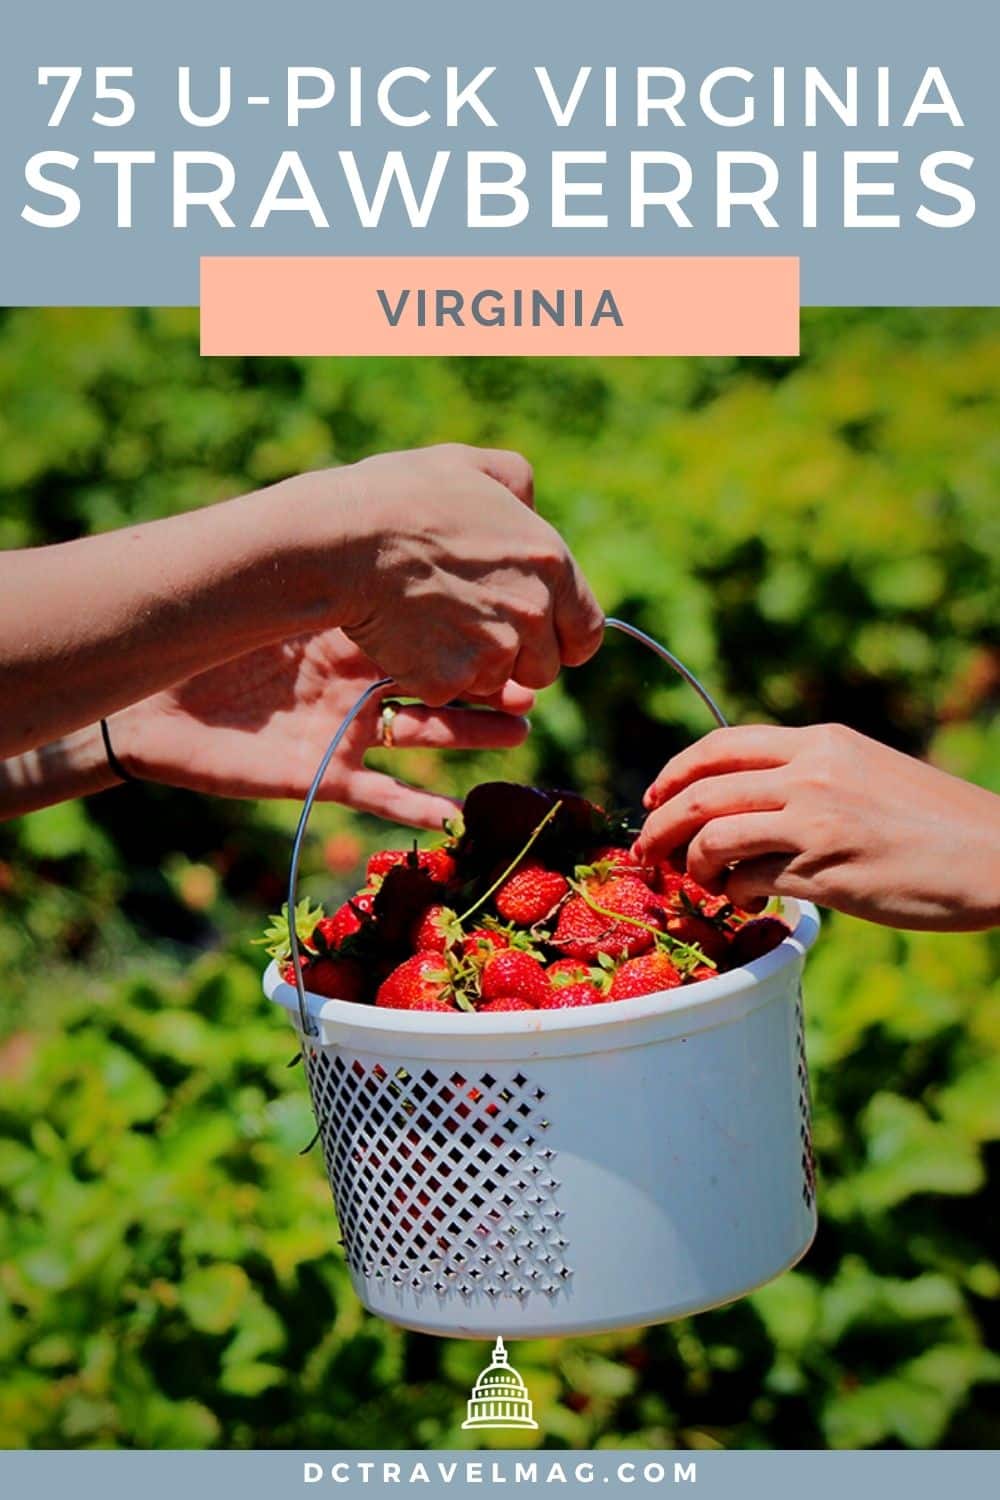 Strawberry Picking In Virginia